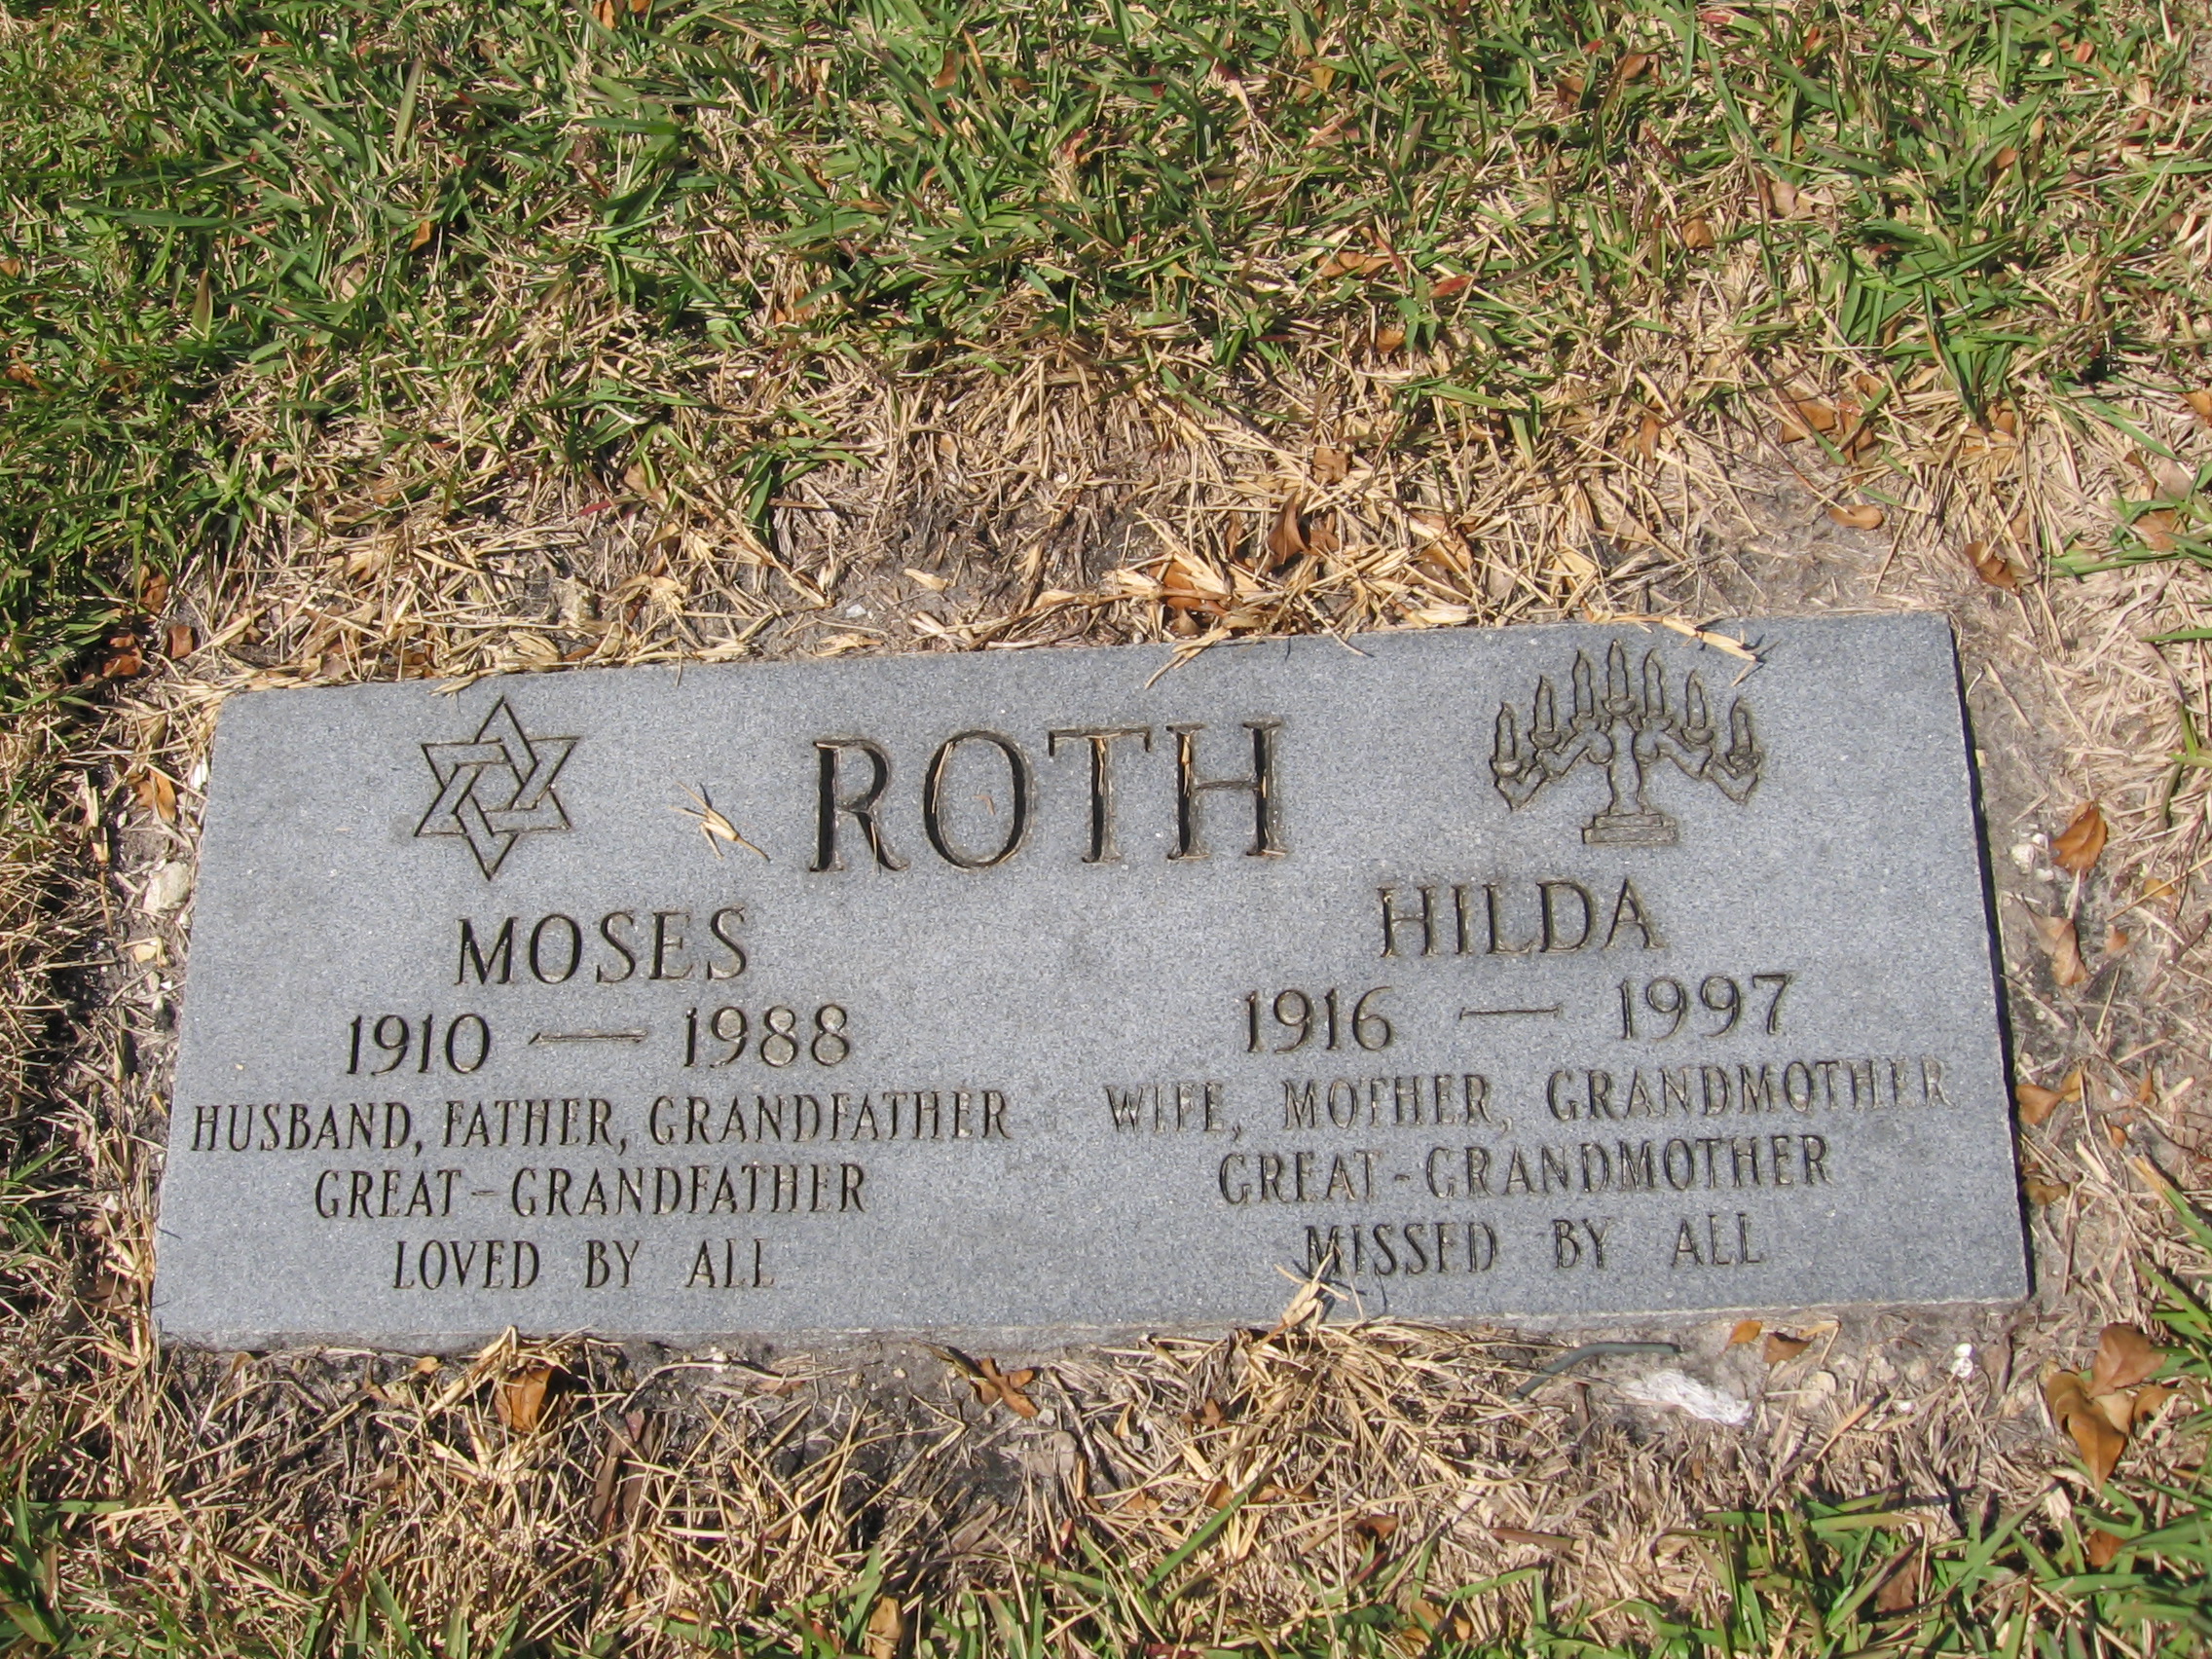 Hilda Roth